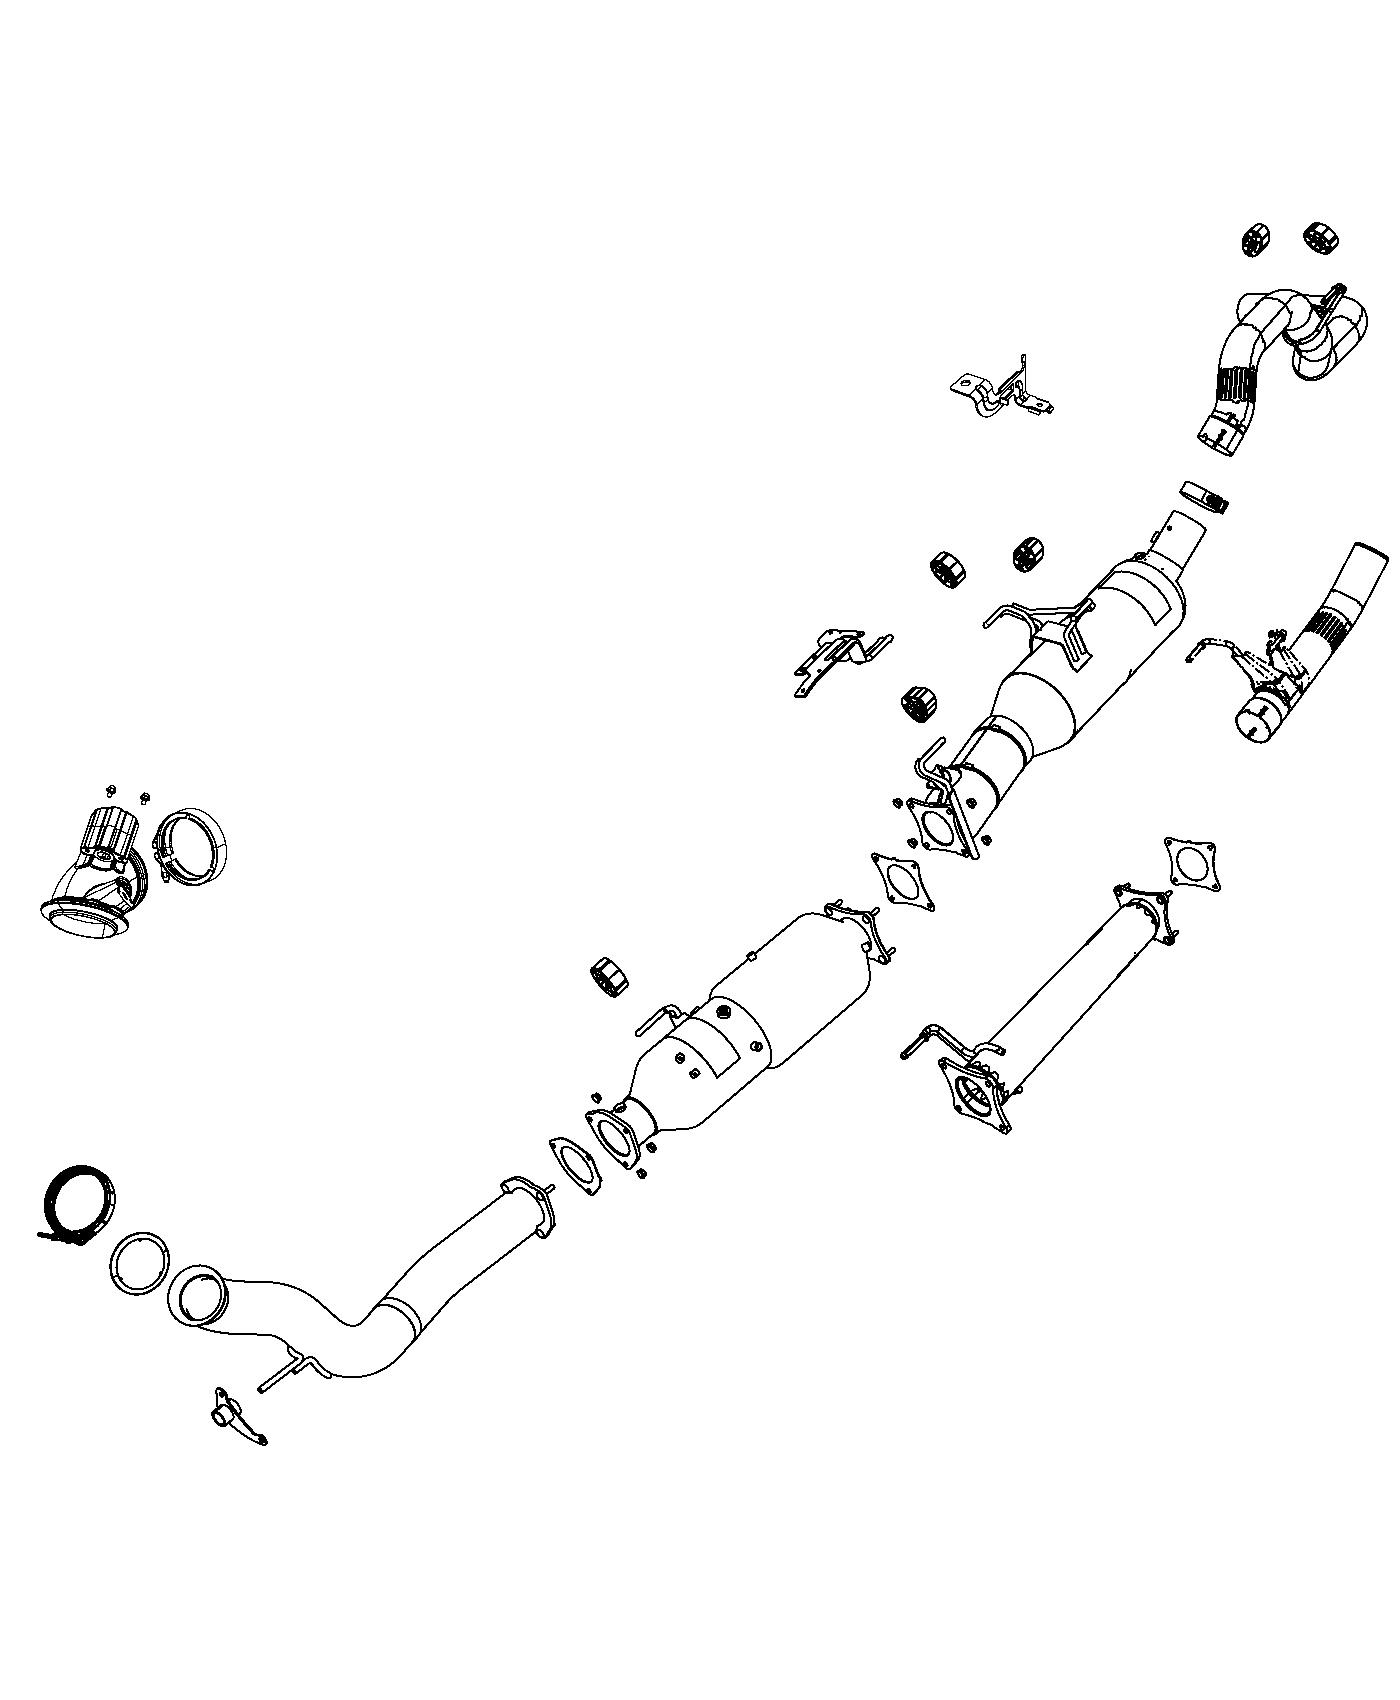 Exhaust System. Diagram